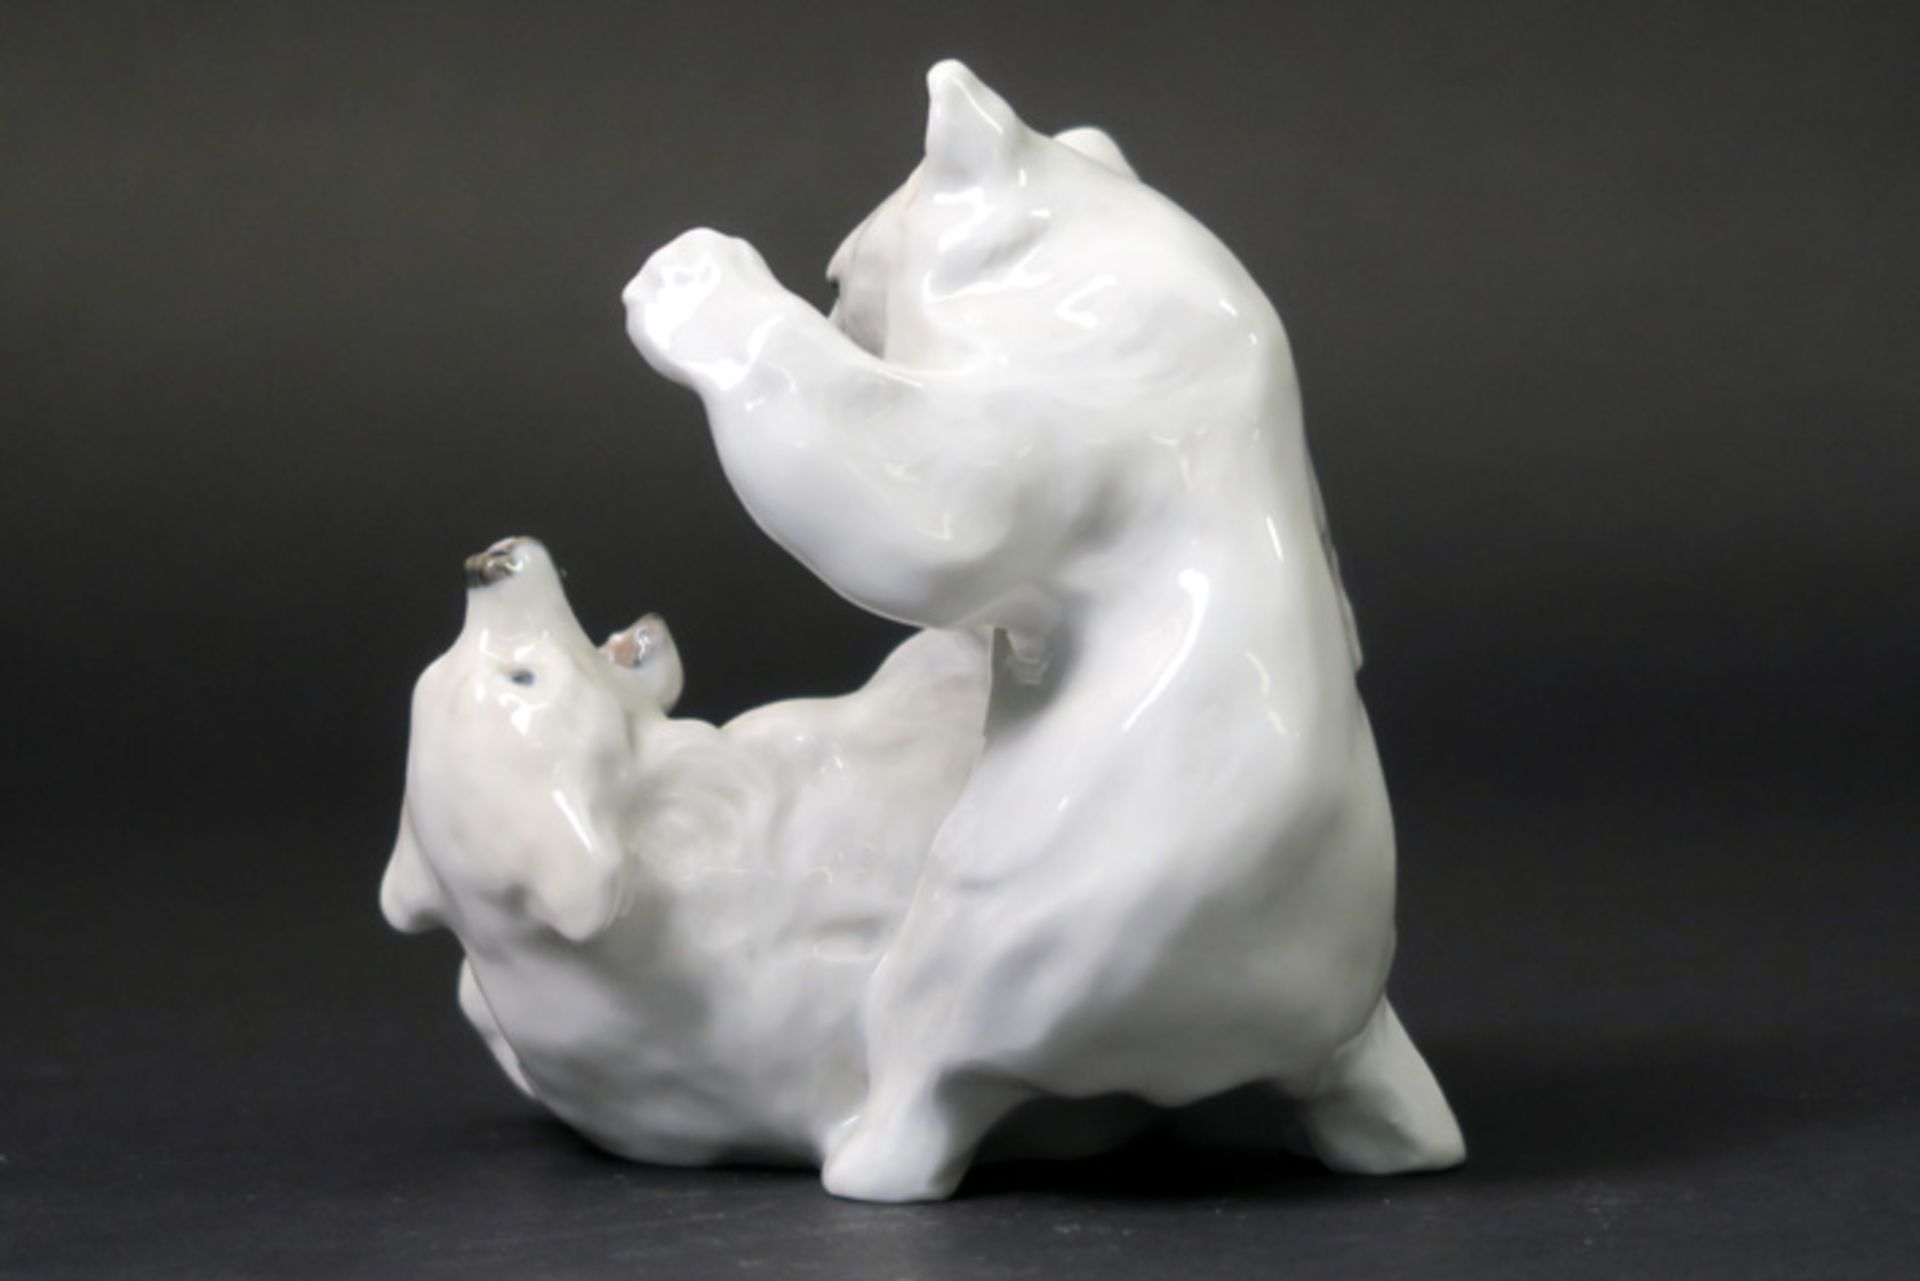 Royal Kopenhagen "Polar Bears" Art Deco sculpture in marked porcelain, designed by Knud Kyhn KNUD - Image 2 of 3